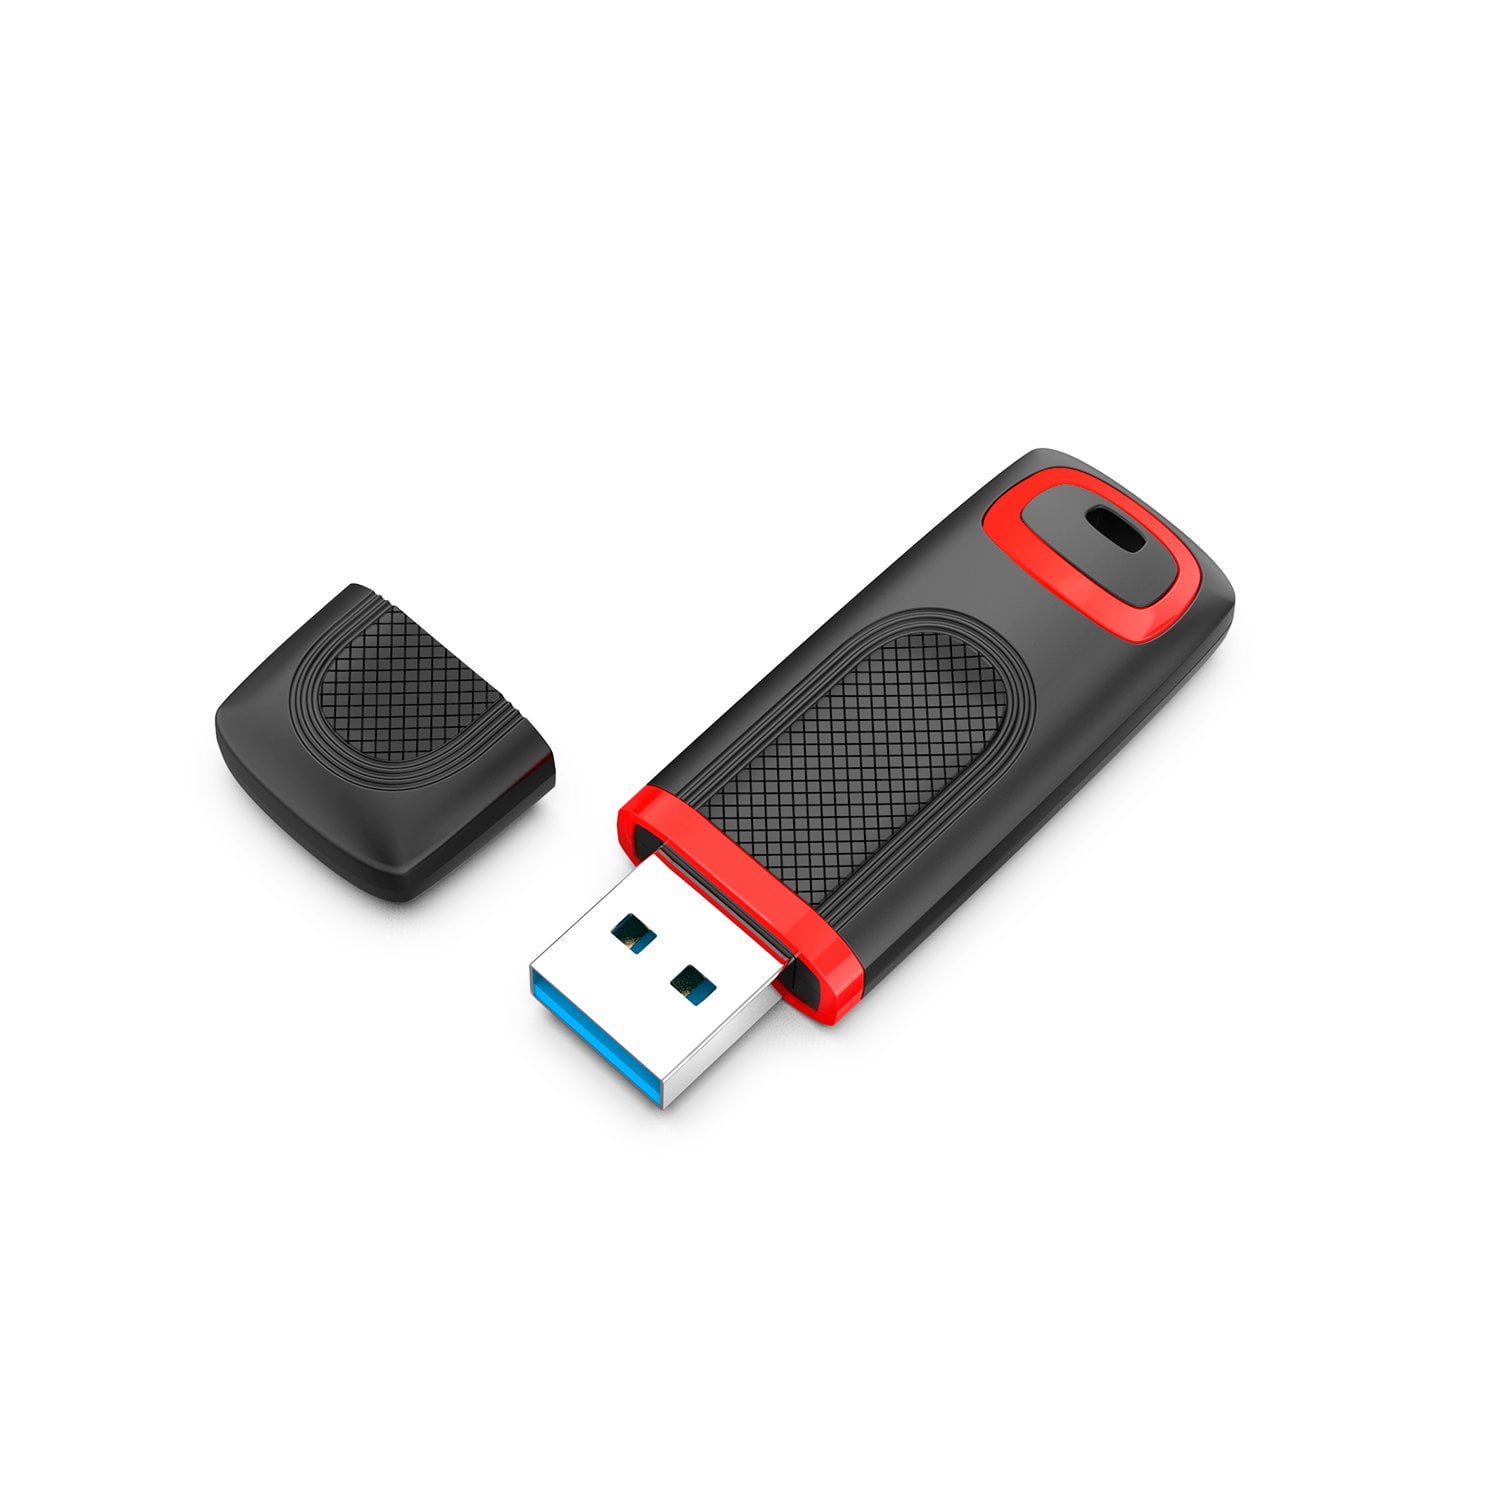 Super Mini USB Flash Drive High Speed Swivel Design Memory Stick Thumb Drive for Data Storage Pen Drive 